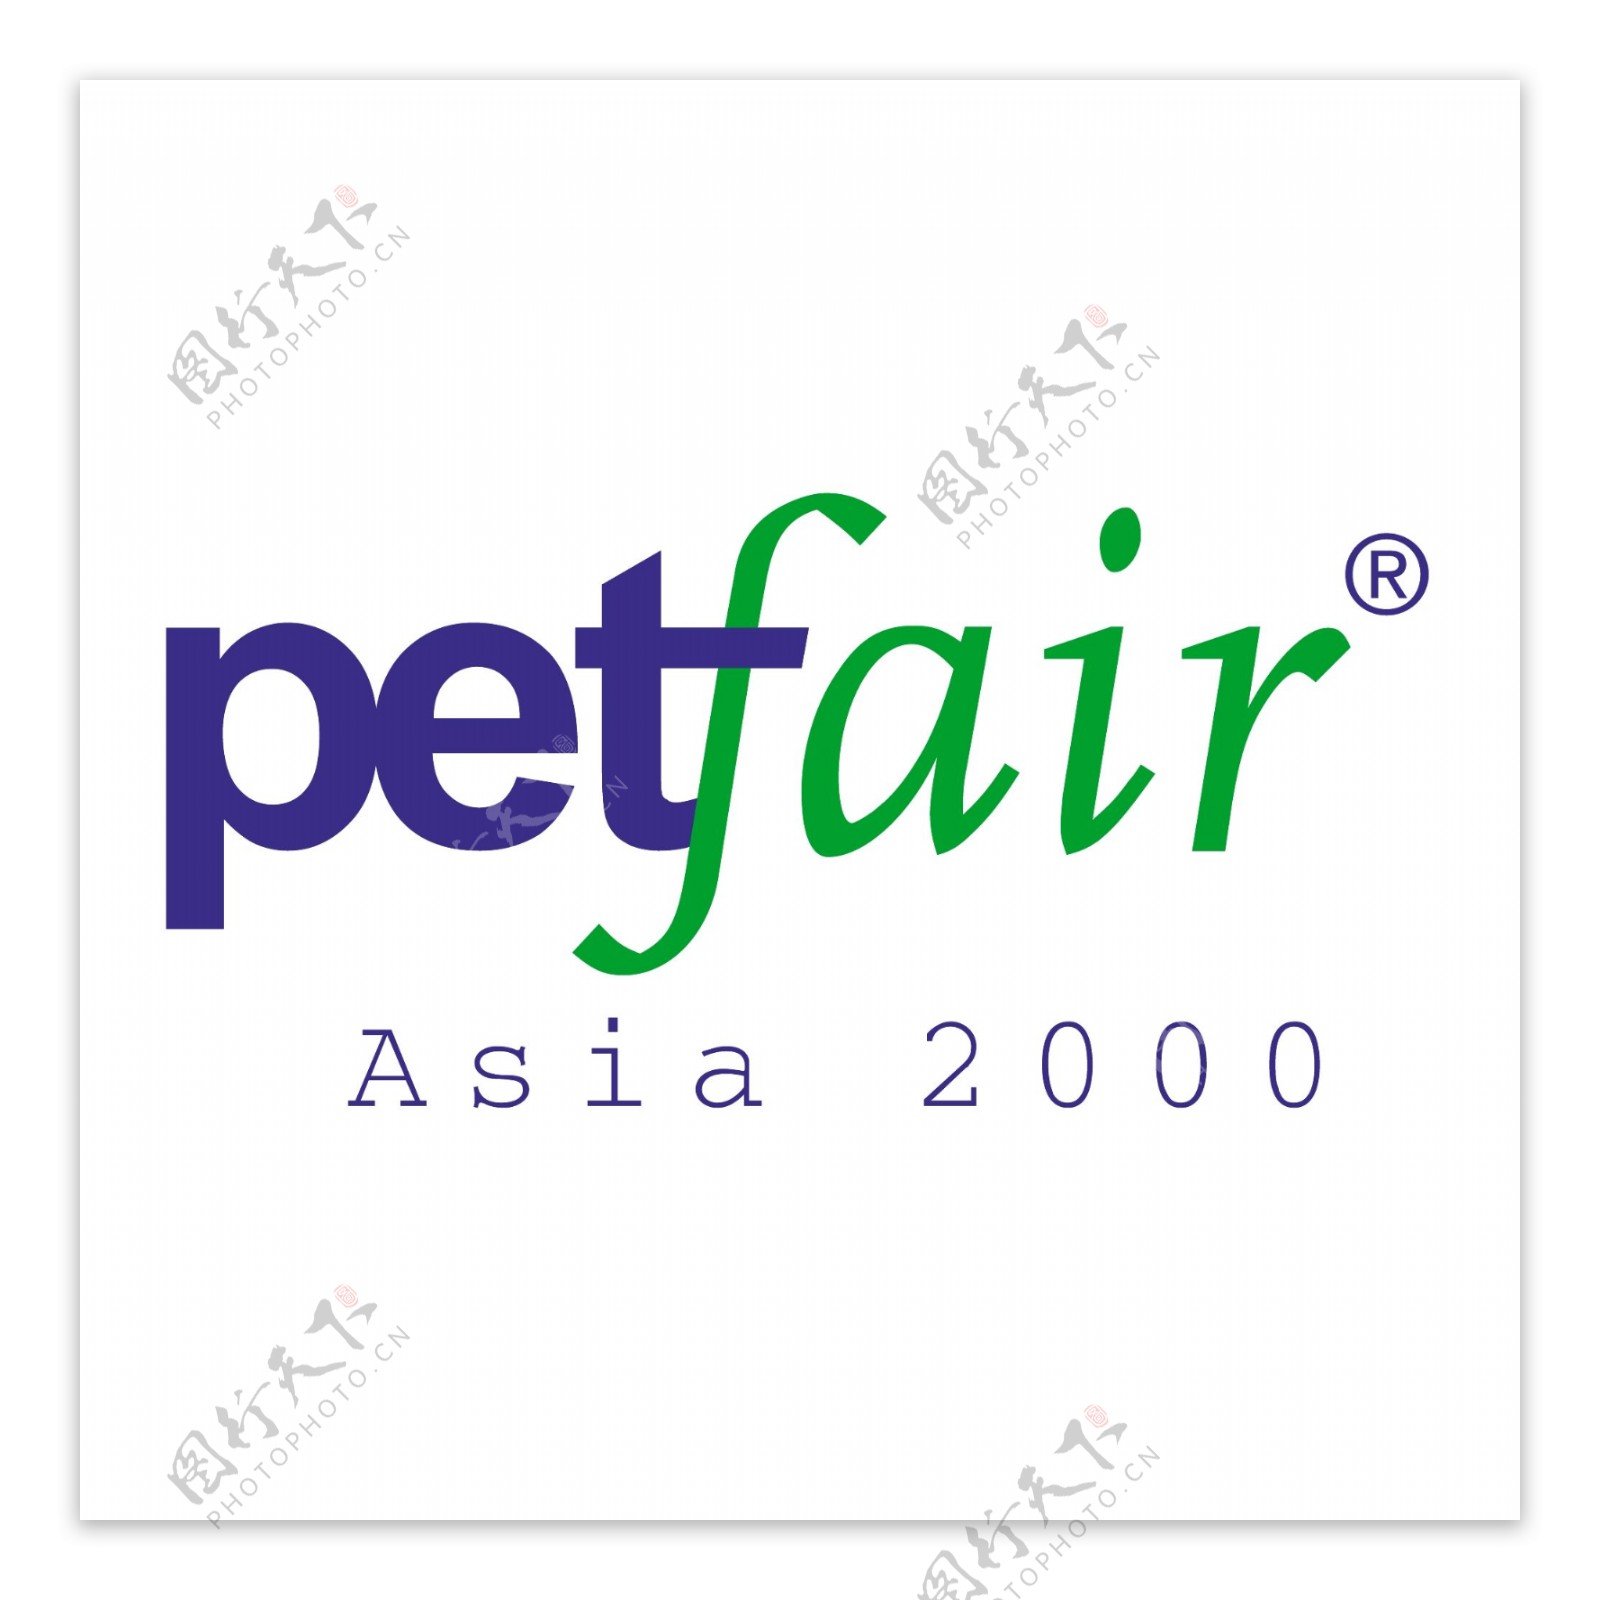 petfair亚洲2000